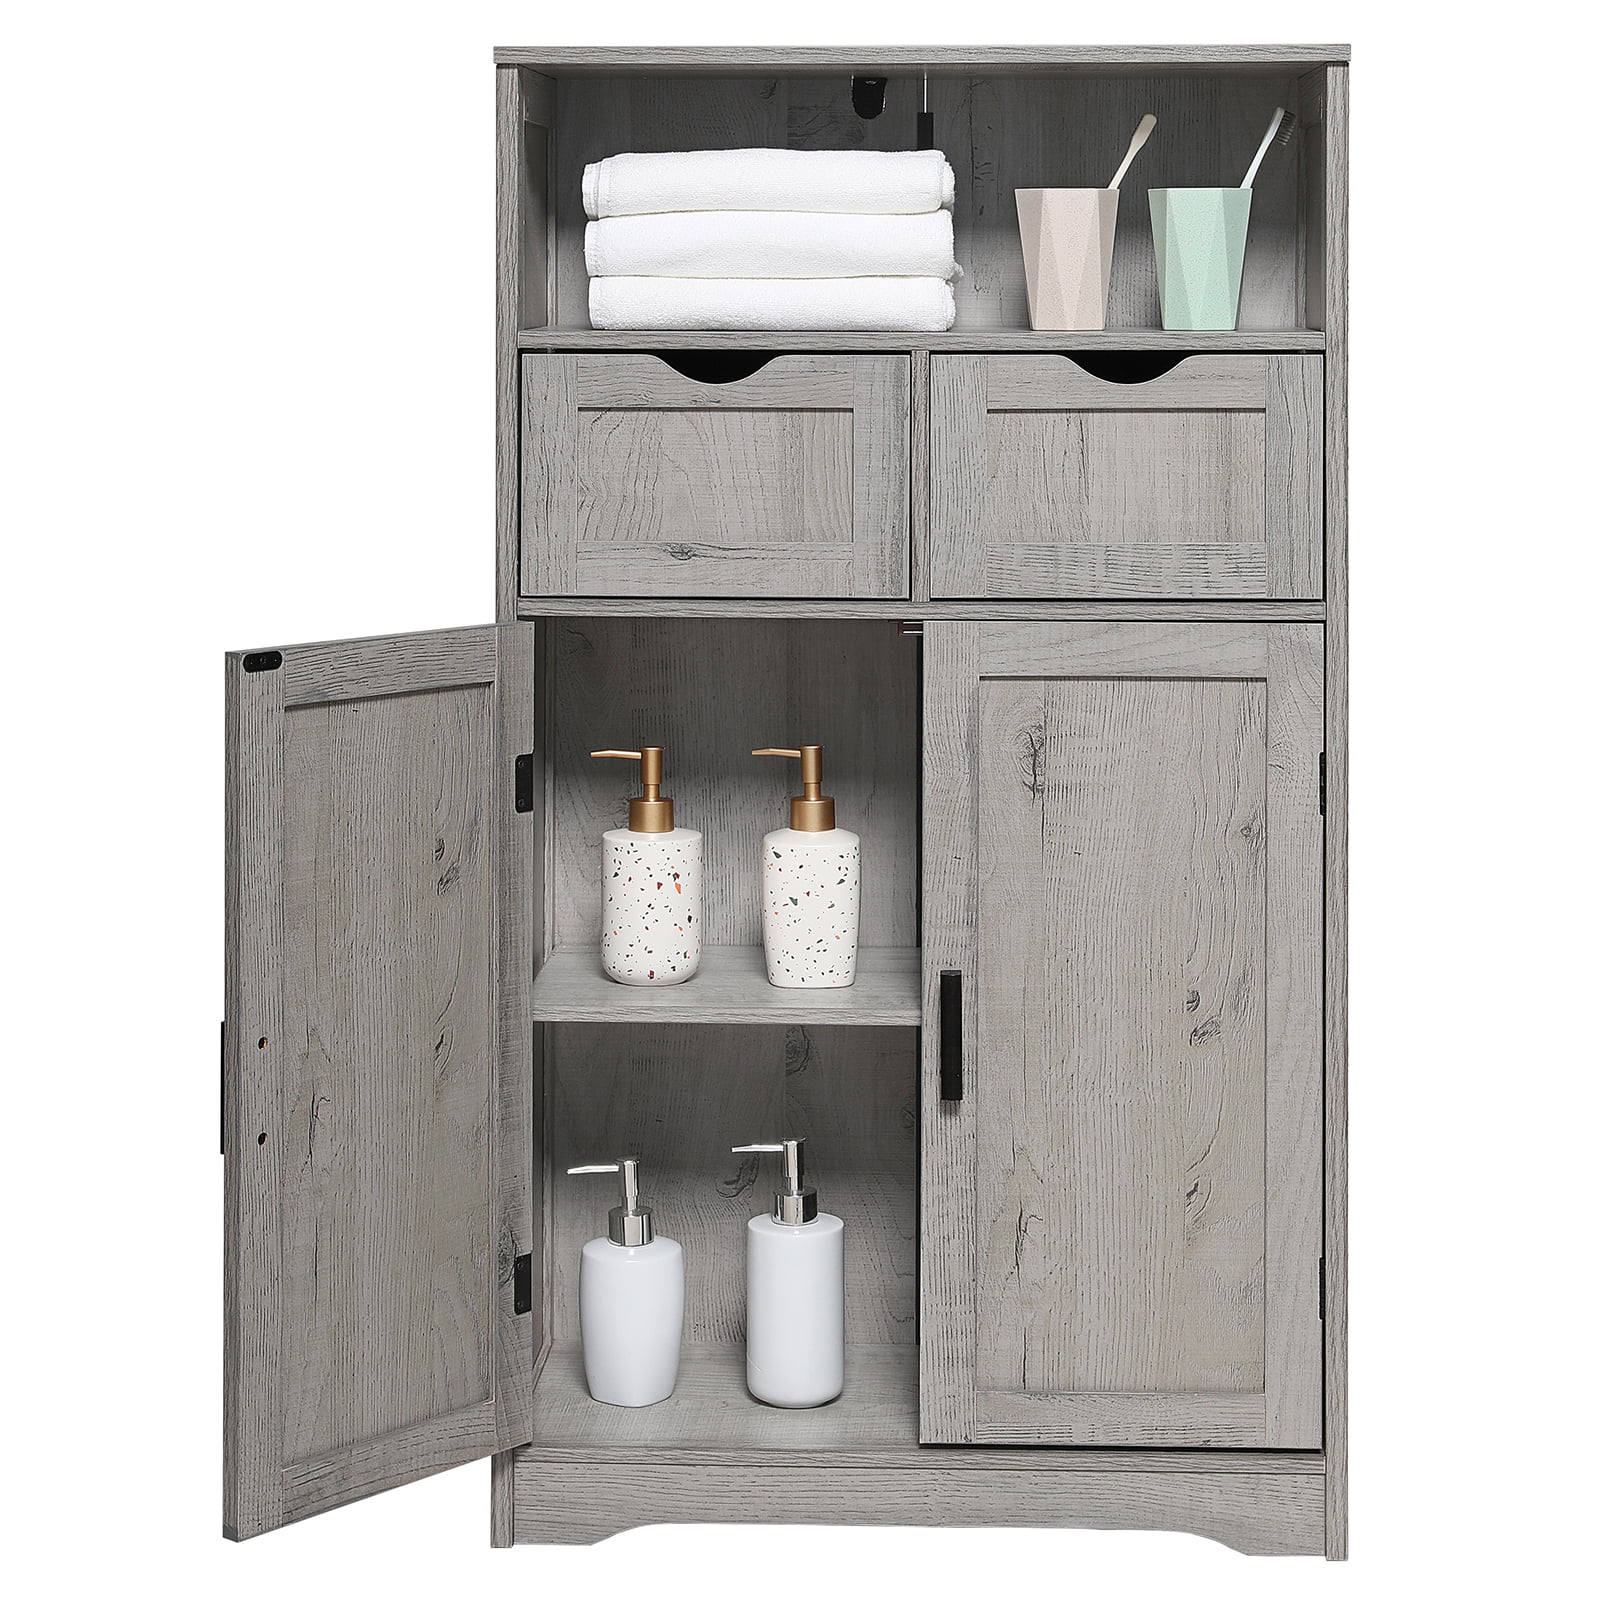 Iwell Storage Cabinet, Bathroom Storage Cabinet with Door and Adjustable  Shelf, 3 Drawers Dresser for Bedroom, Kitchen Storage Cabinet, Accent  Cabinet